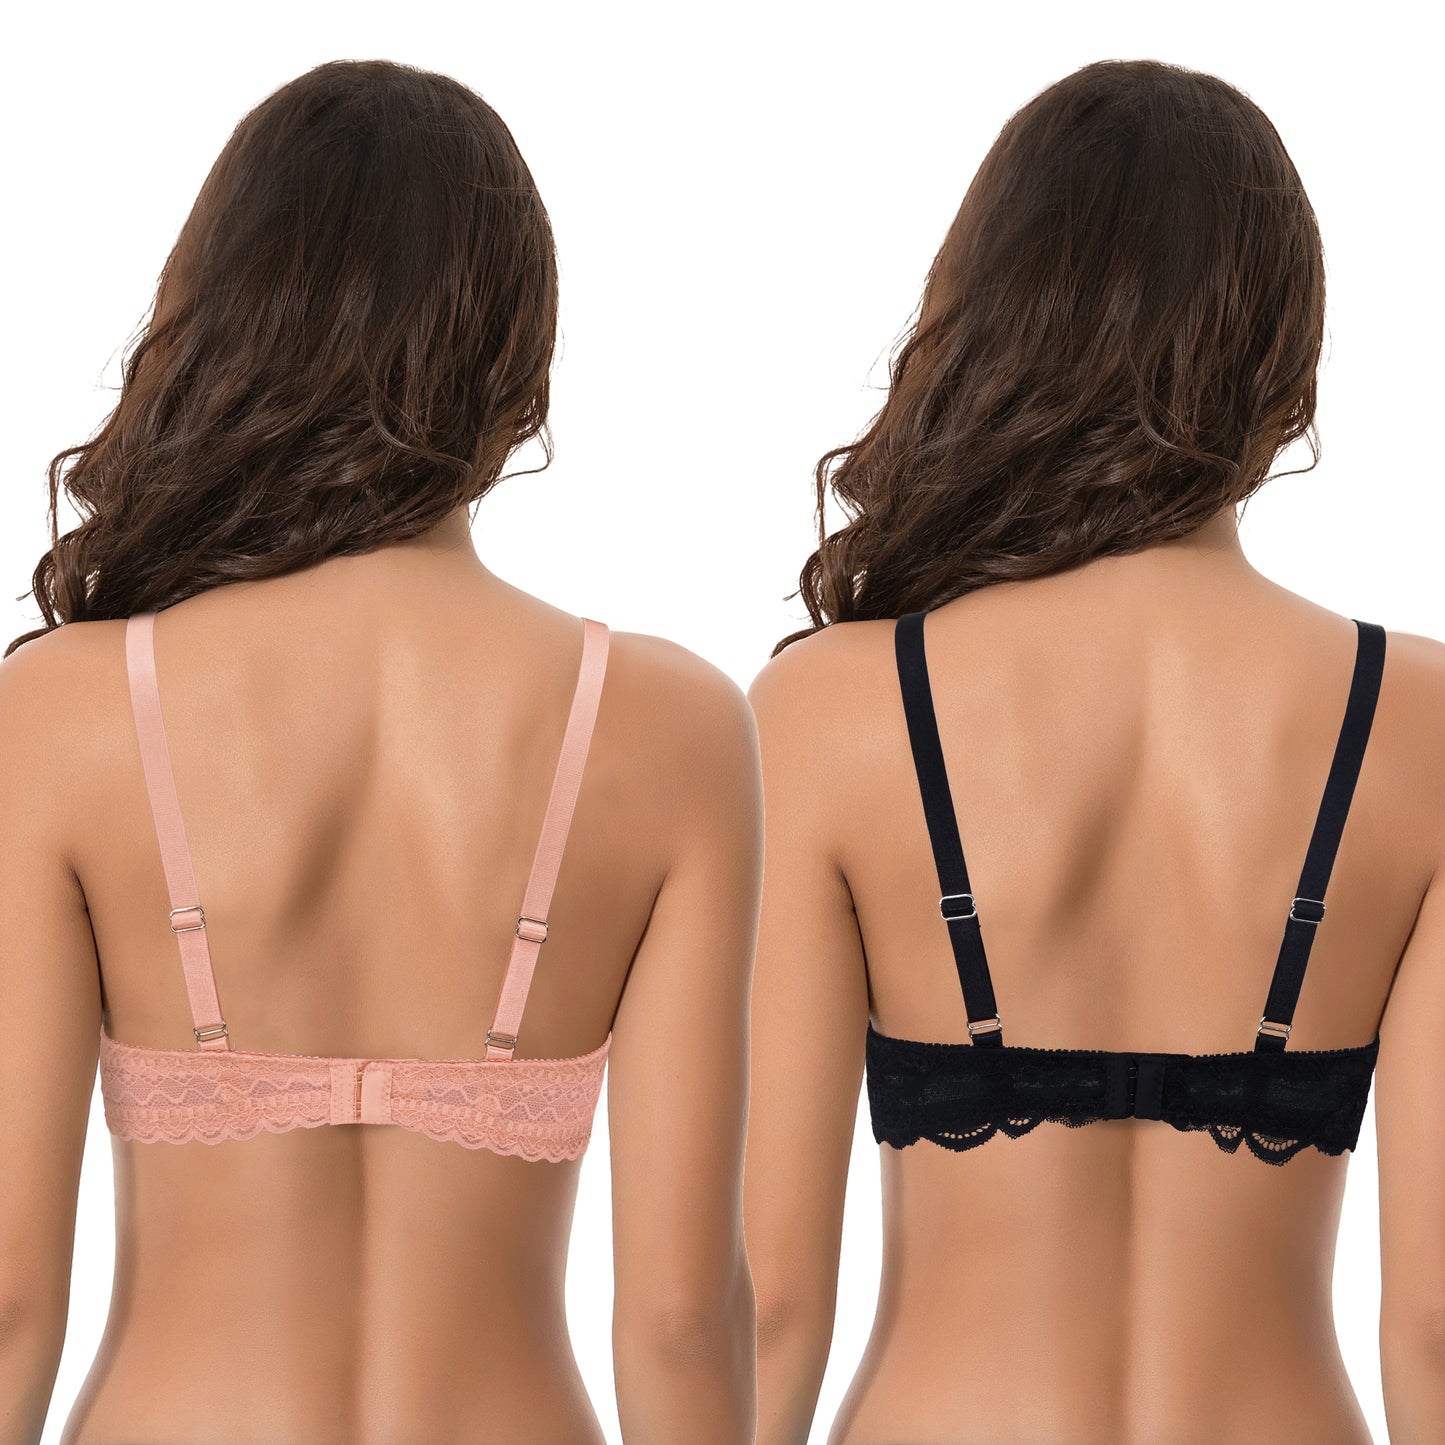 Women's Plus Size Push Up Add 1 Cup Underwire Perfect Shape Lace Bras-2Pk-Black,Peach